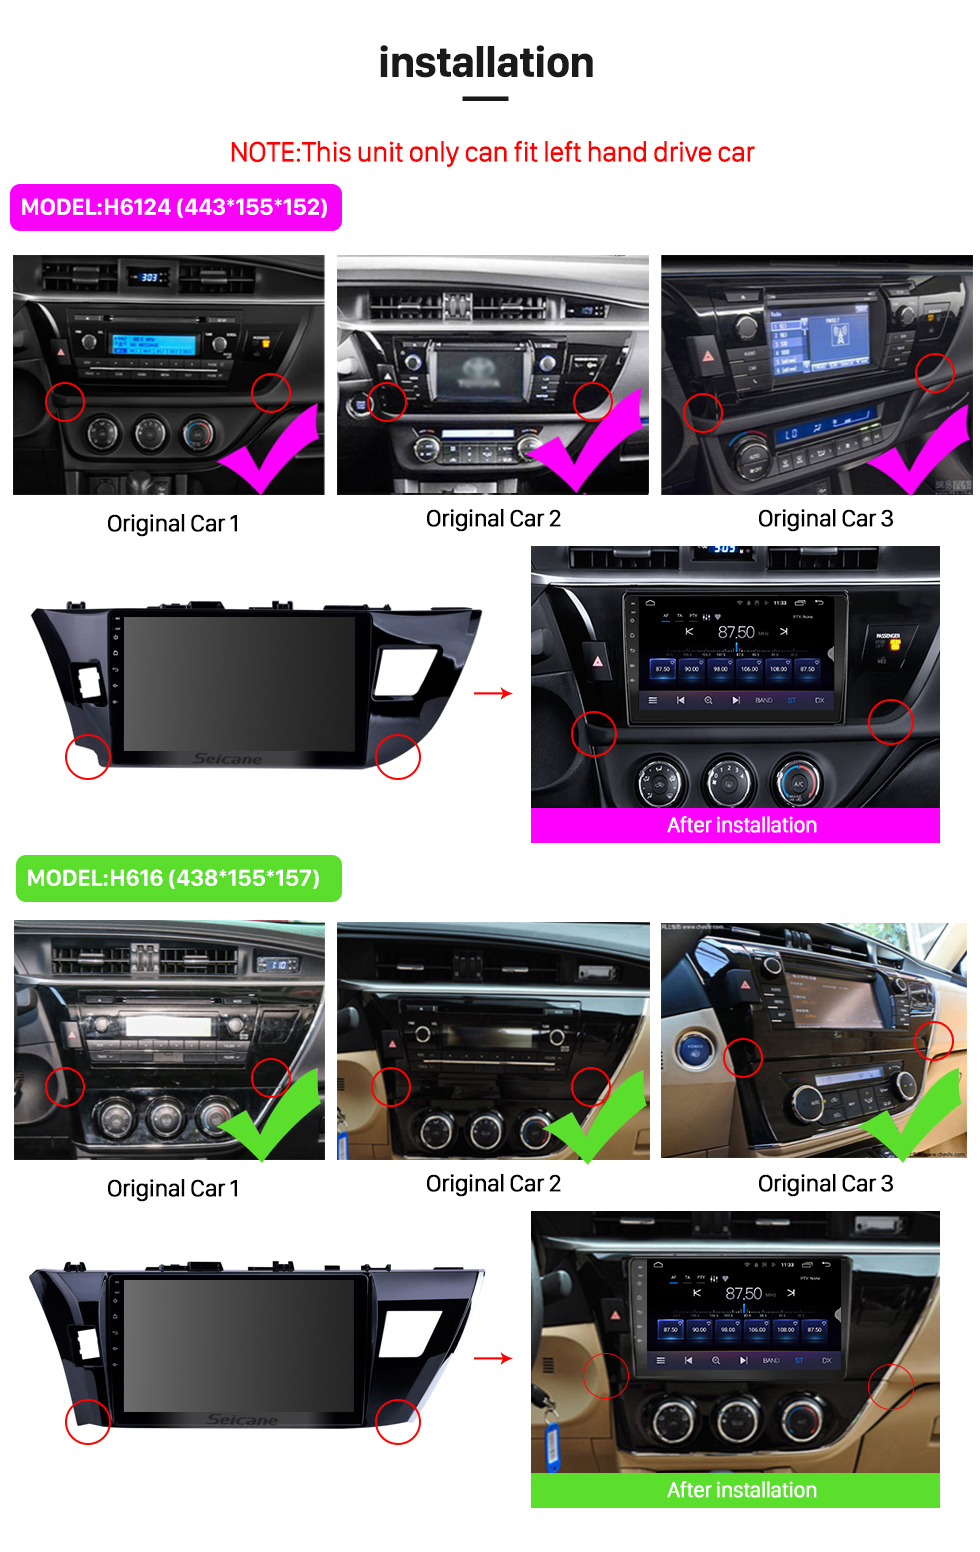 Seicane 10,1 Zoll Android 13.0 Touchscreen Radio Bluetooth GPS Navigationssystem Für Toyota Corolla 11 2012-2014 2015 2016 E170 E180 Unterstützung TPMS DVR OBD II USB SD WiFi Rückfahrkamera Lenkradsteuerung HD 1080P Video AUX